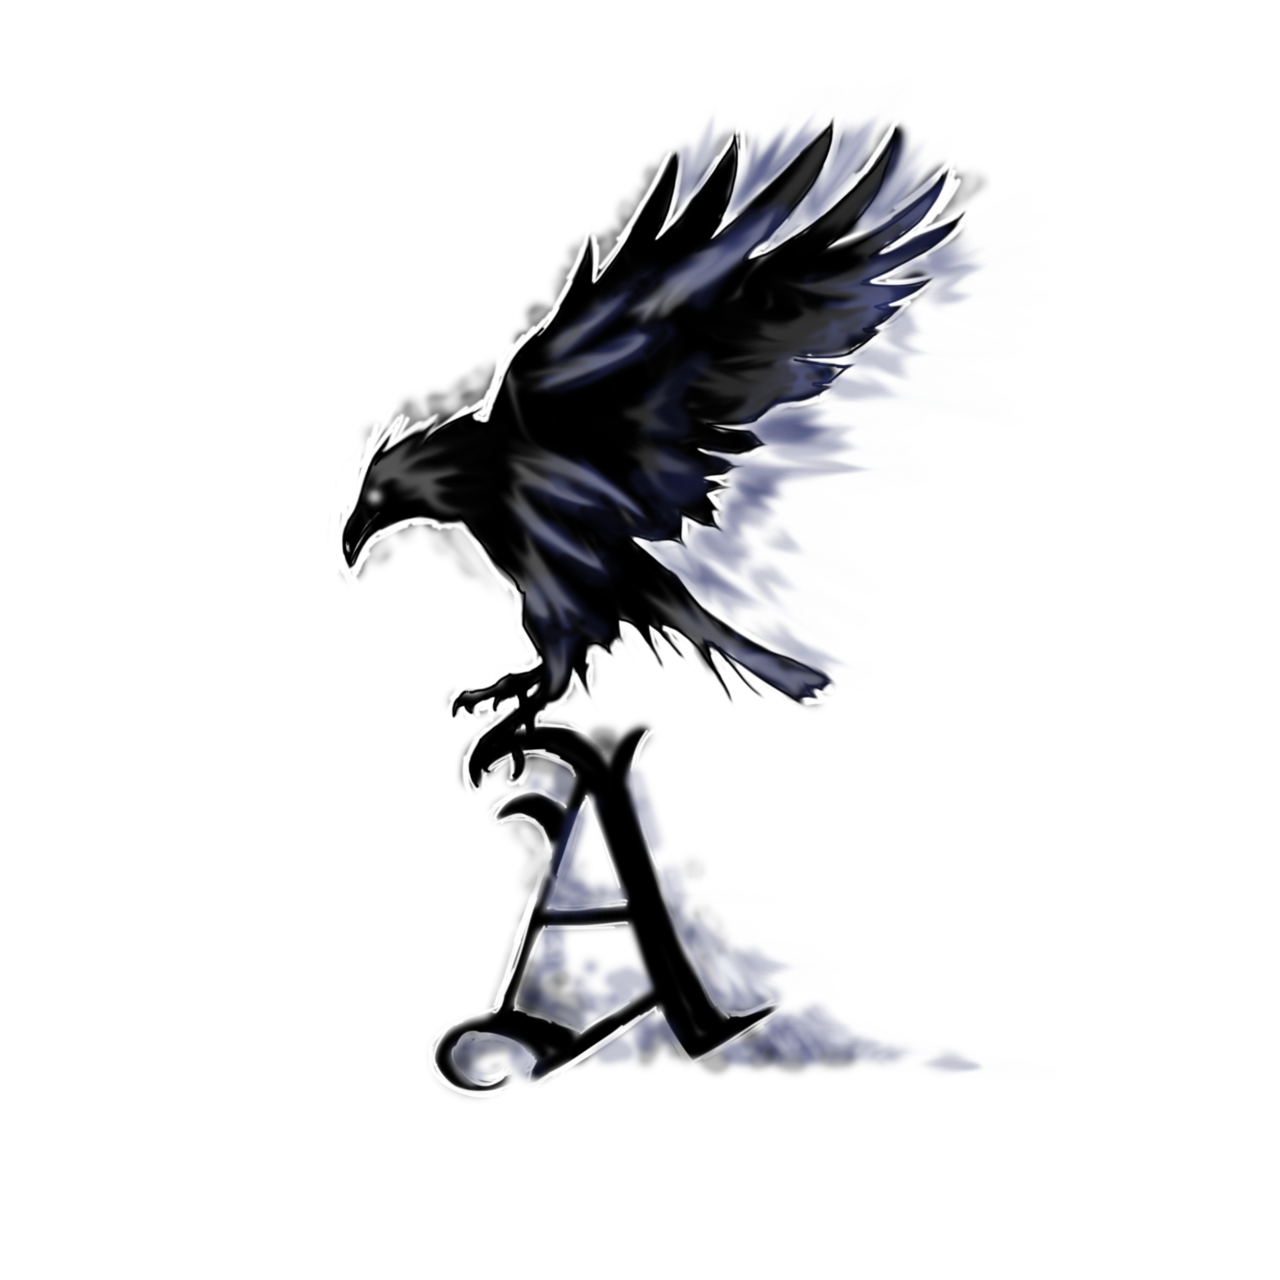 Raven Crest or Sigil made by Dworvin